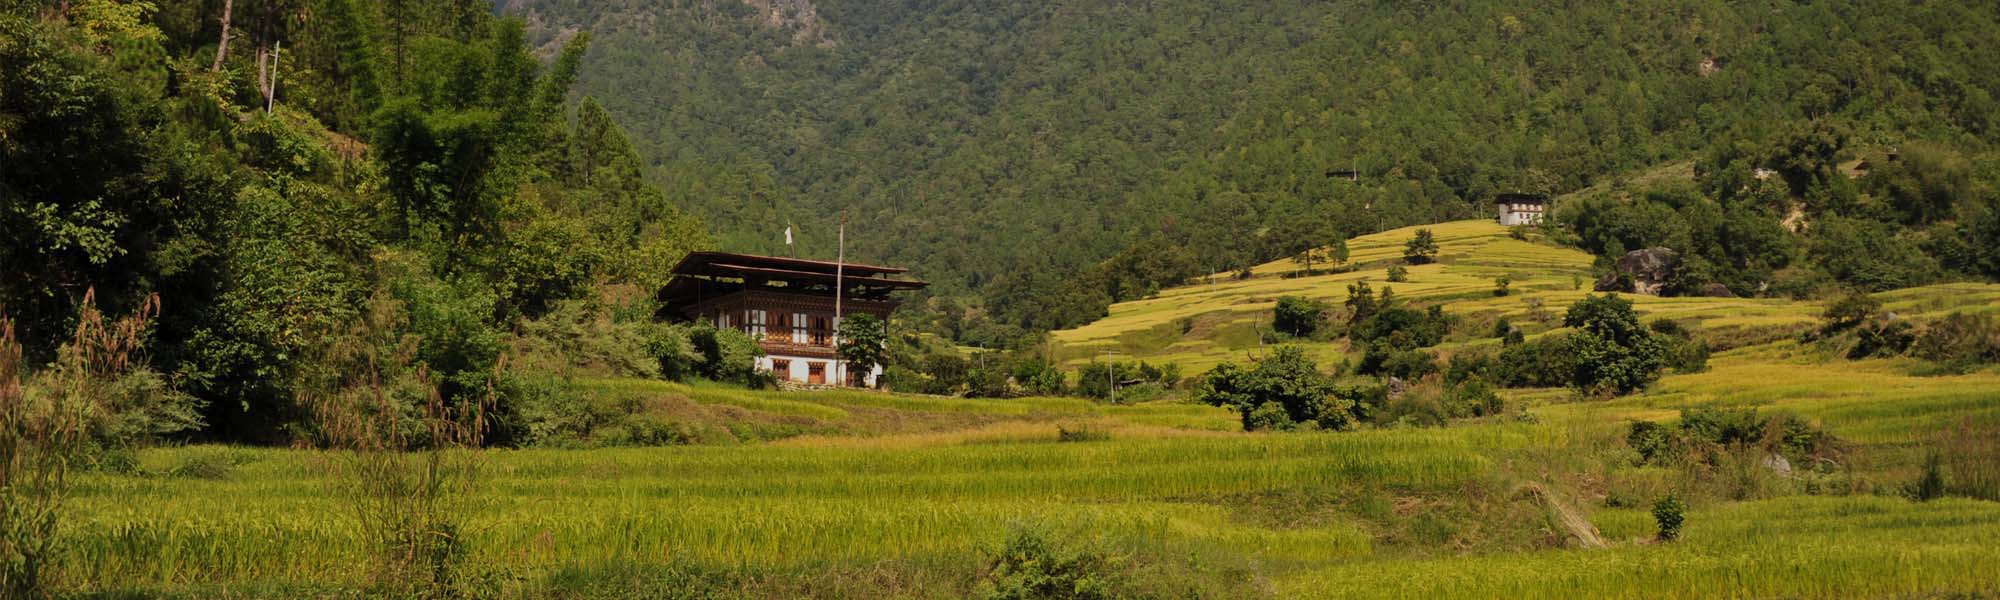 Bhutan of Tourism